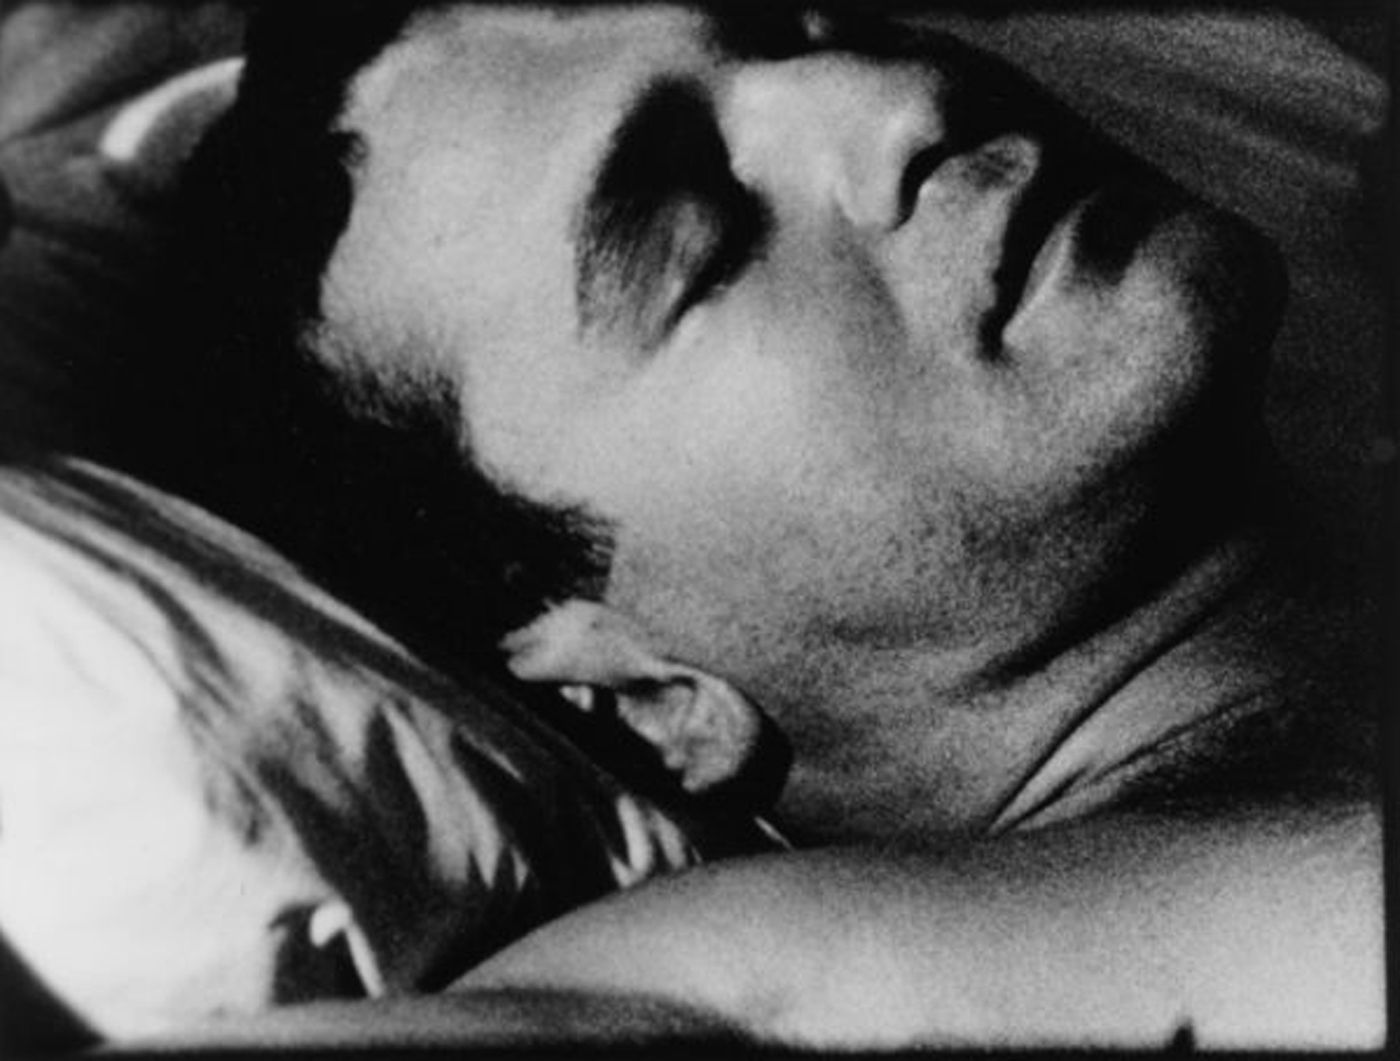 Still from Sleep film by Andy Warhol